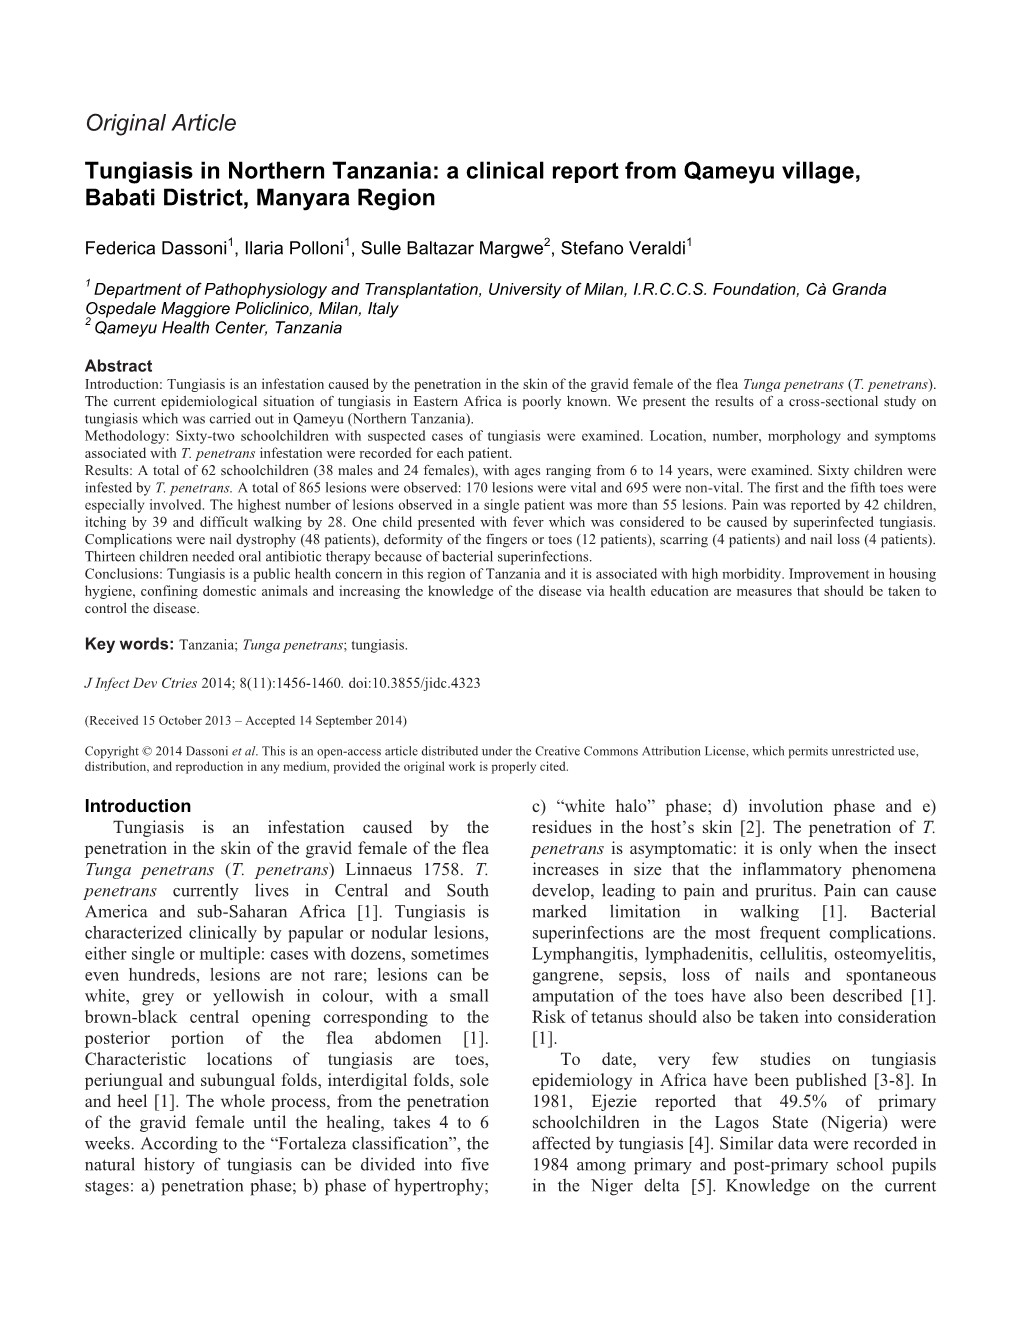 Original Article Tungiasis in Northern Tanzania